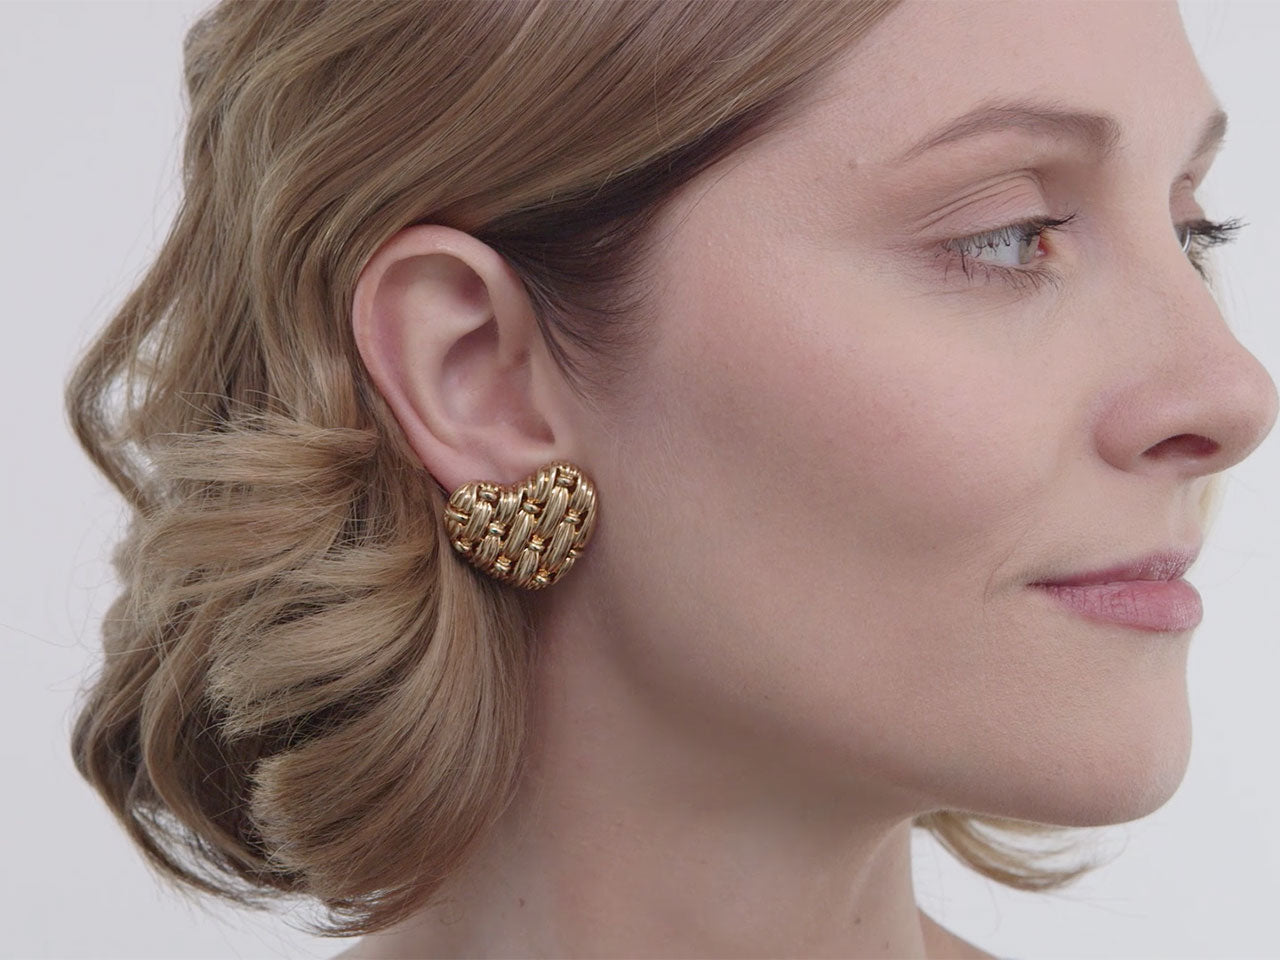 Tiffany & Co. Signature Series 'Woven Heart' Earrings in 18K